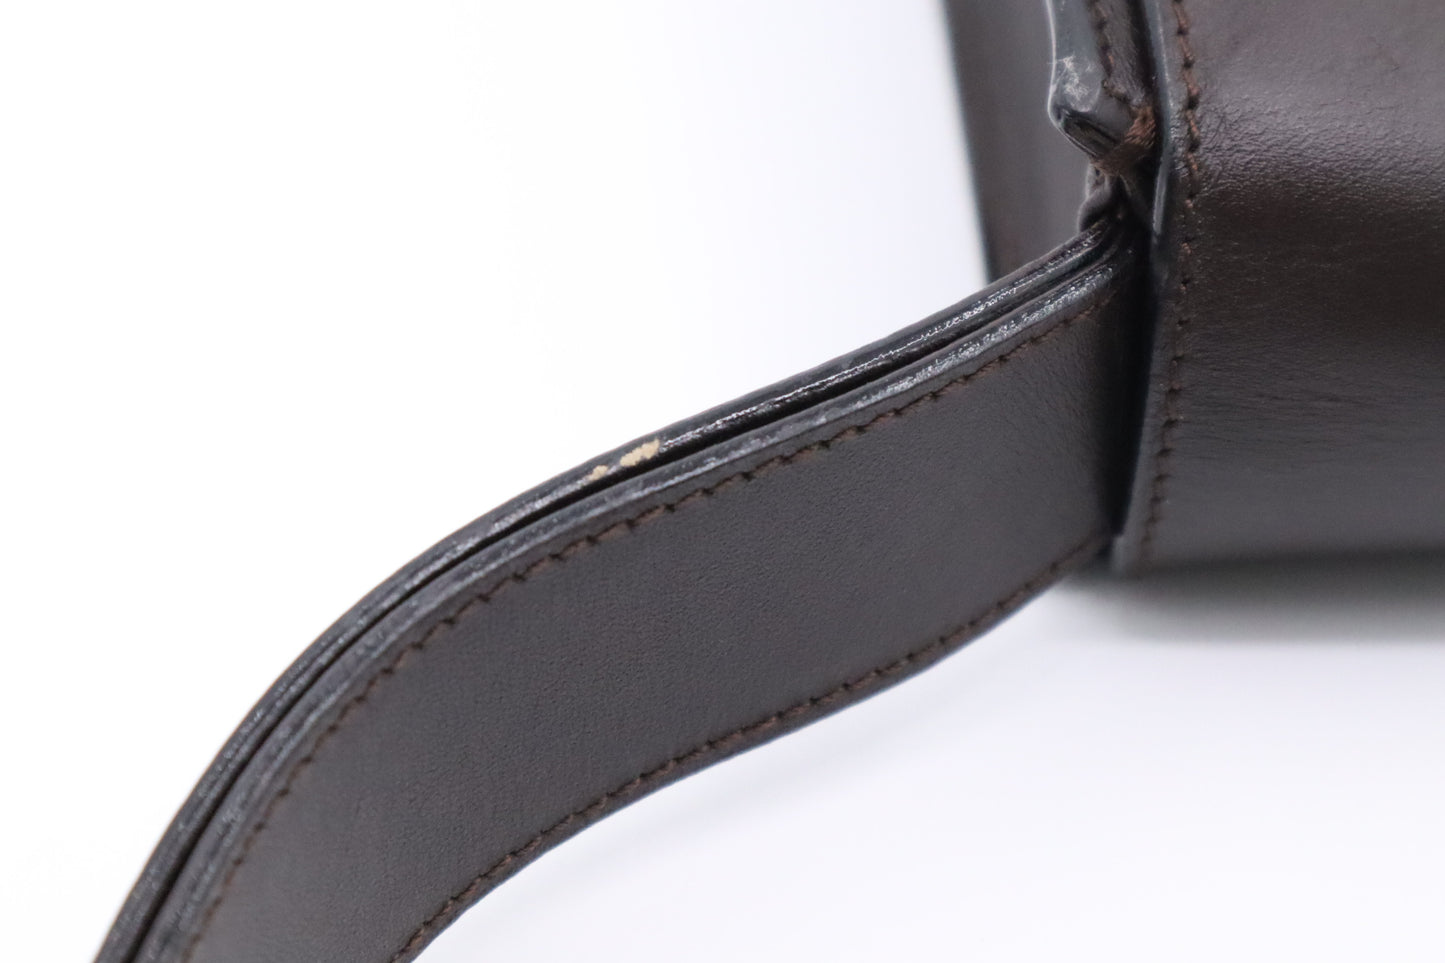 Gucci Shoulder Bag in Brown Leather